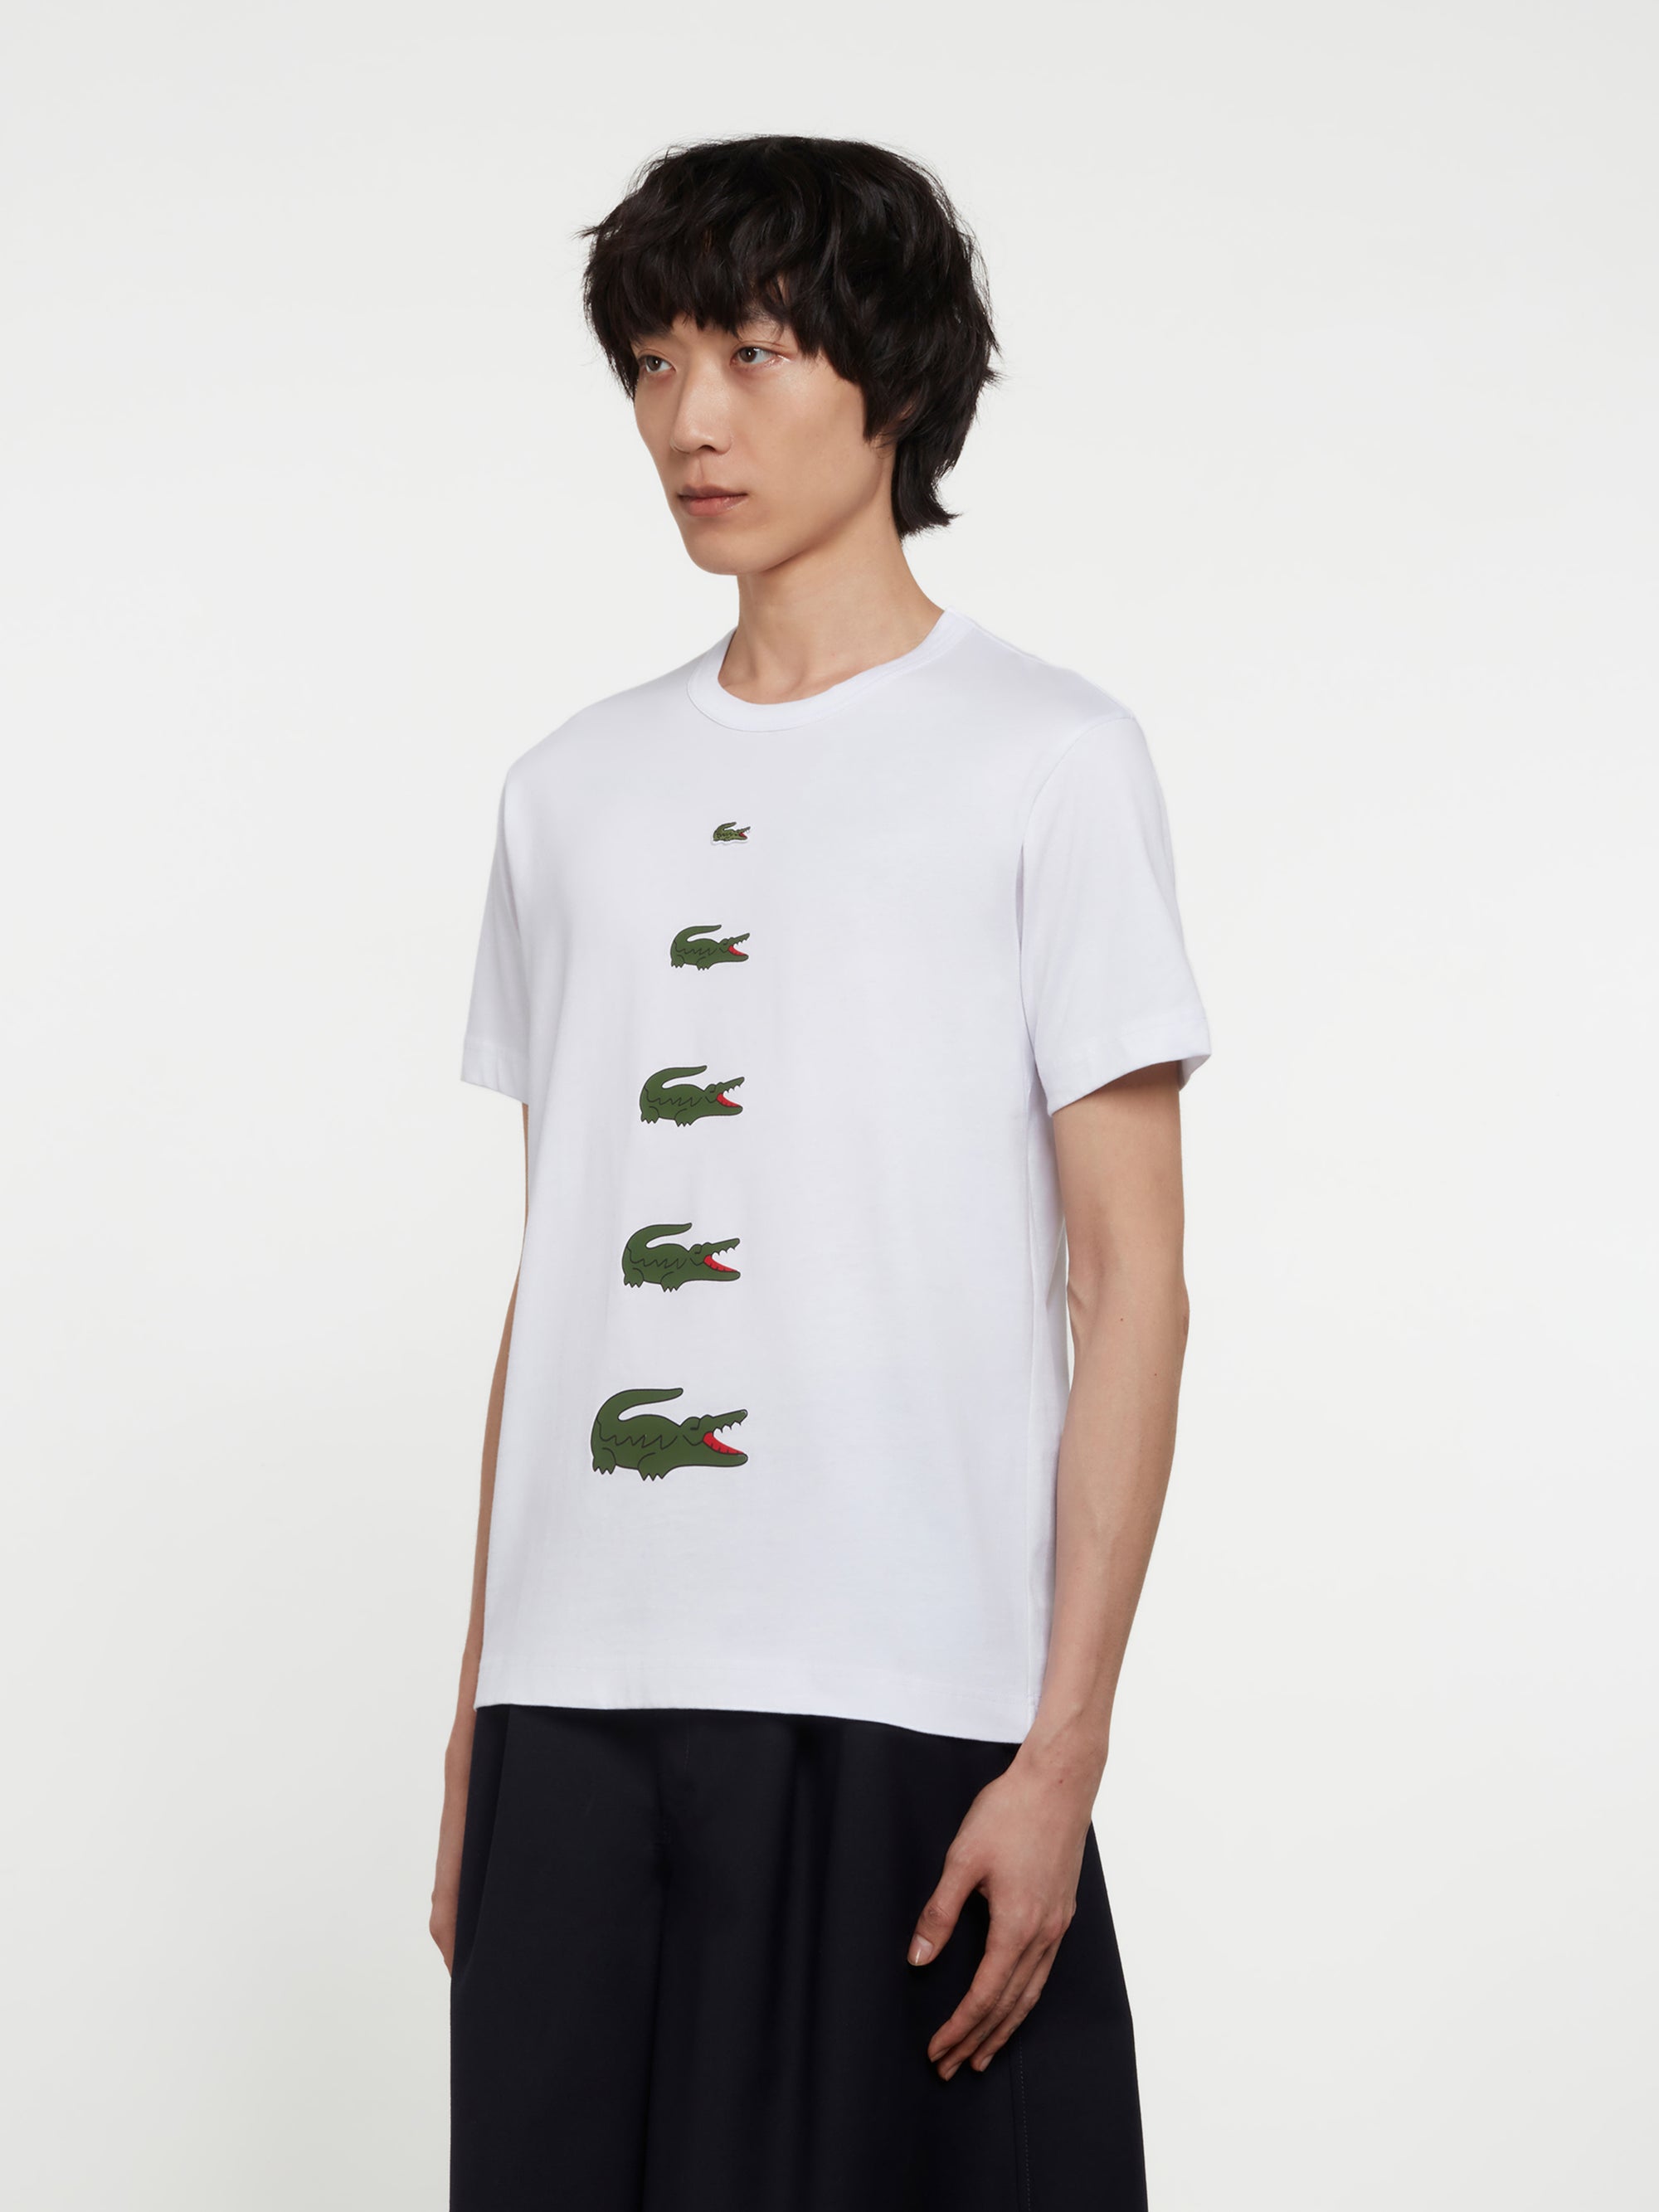 CDG Shirt - Lacoste Men’s Printed T-Shirt - (White) view 2